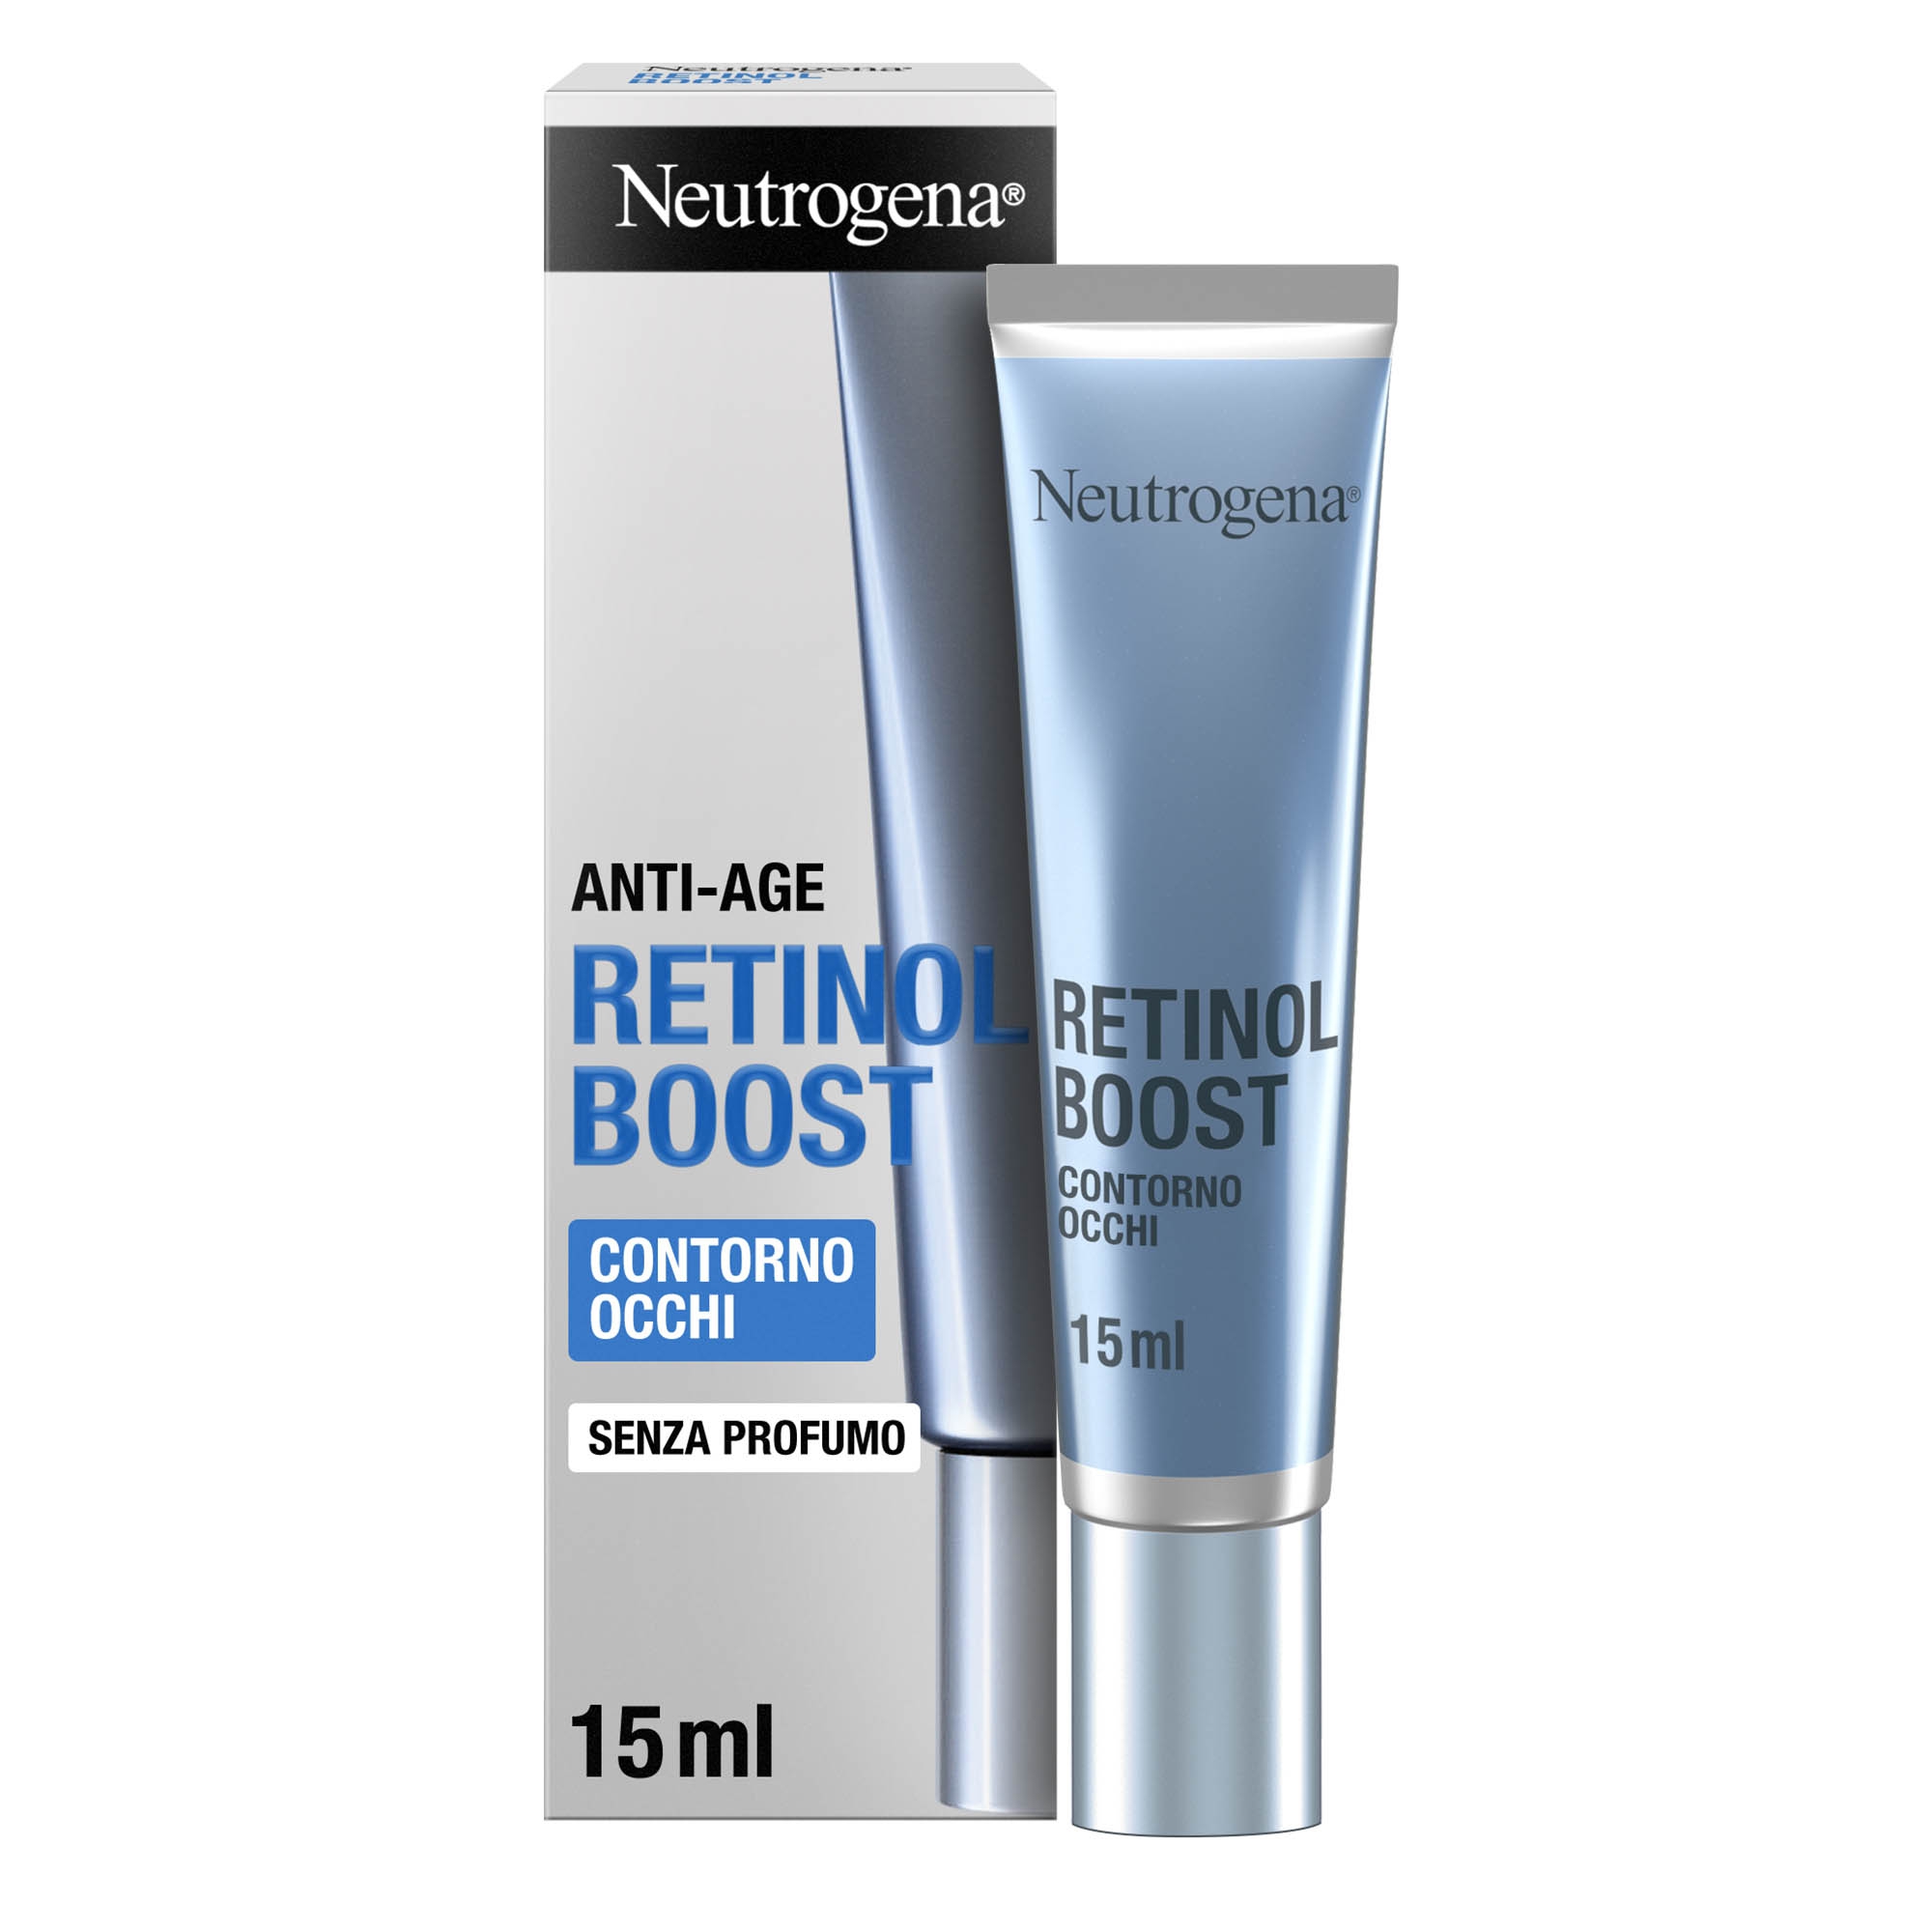 Neutrogena Retinol Boost Crema Contorno Occhi 15 ml